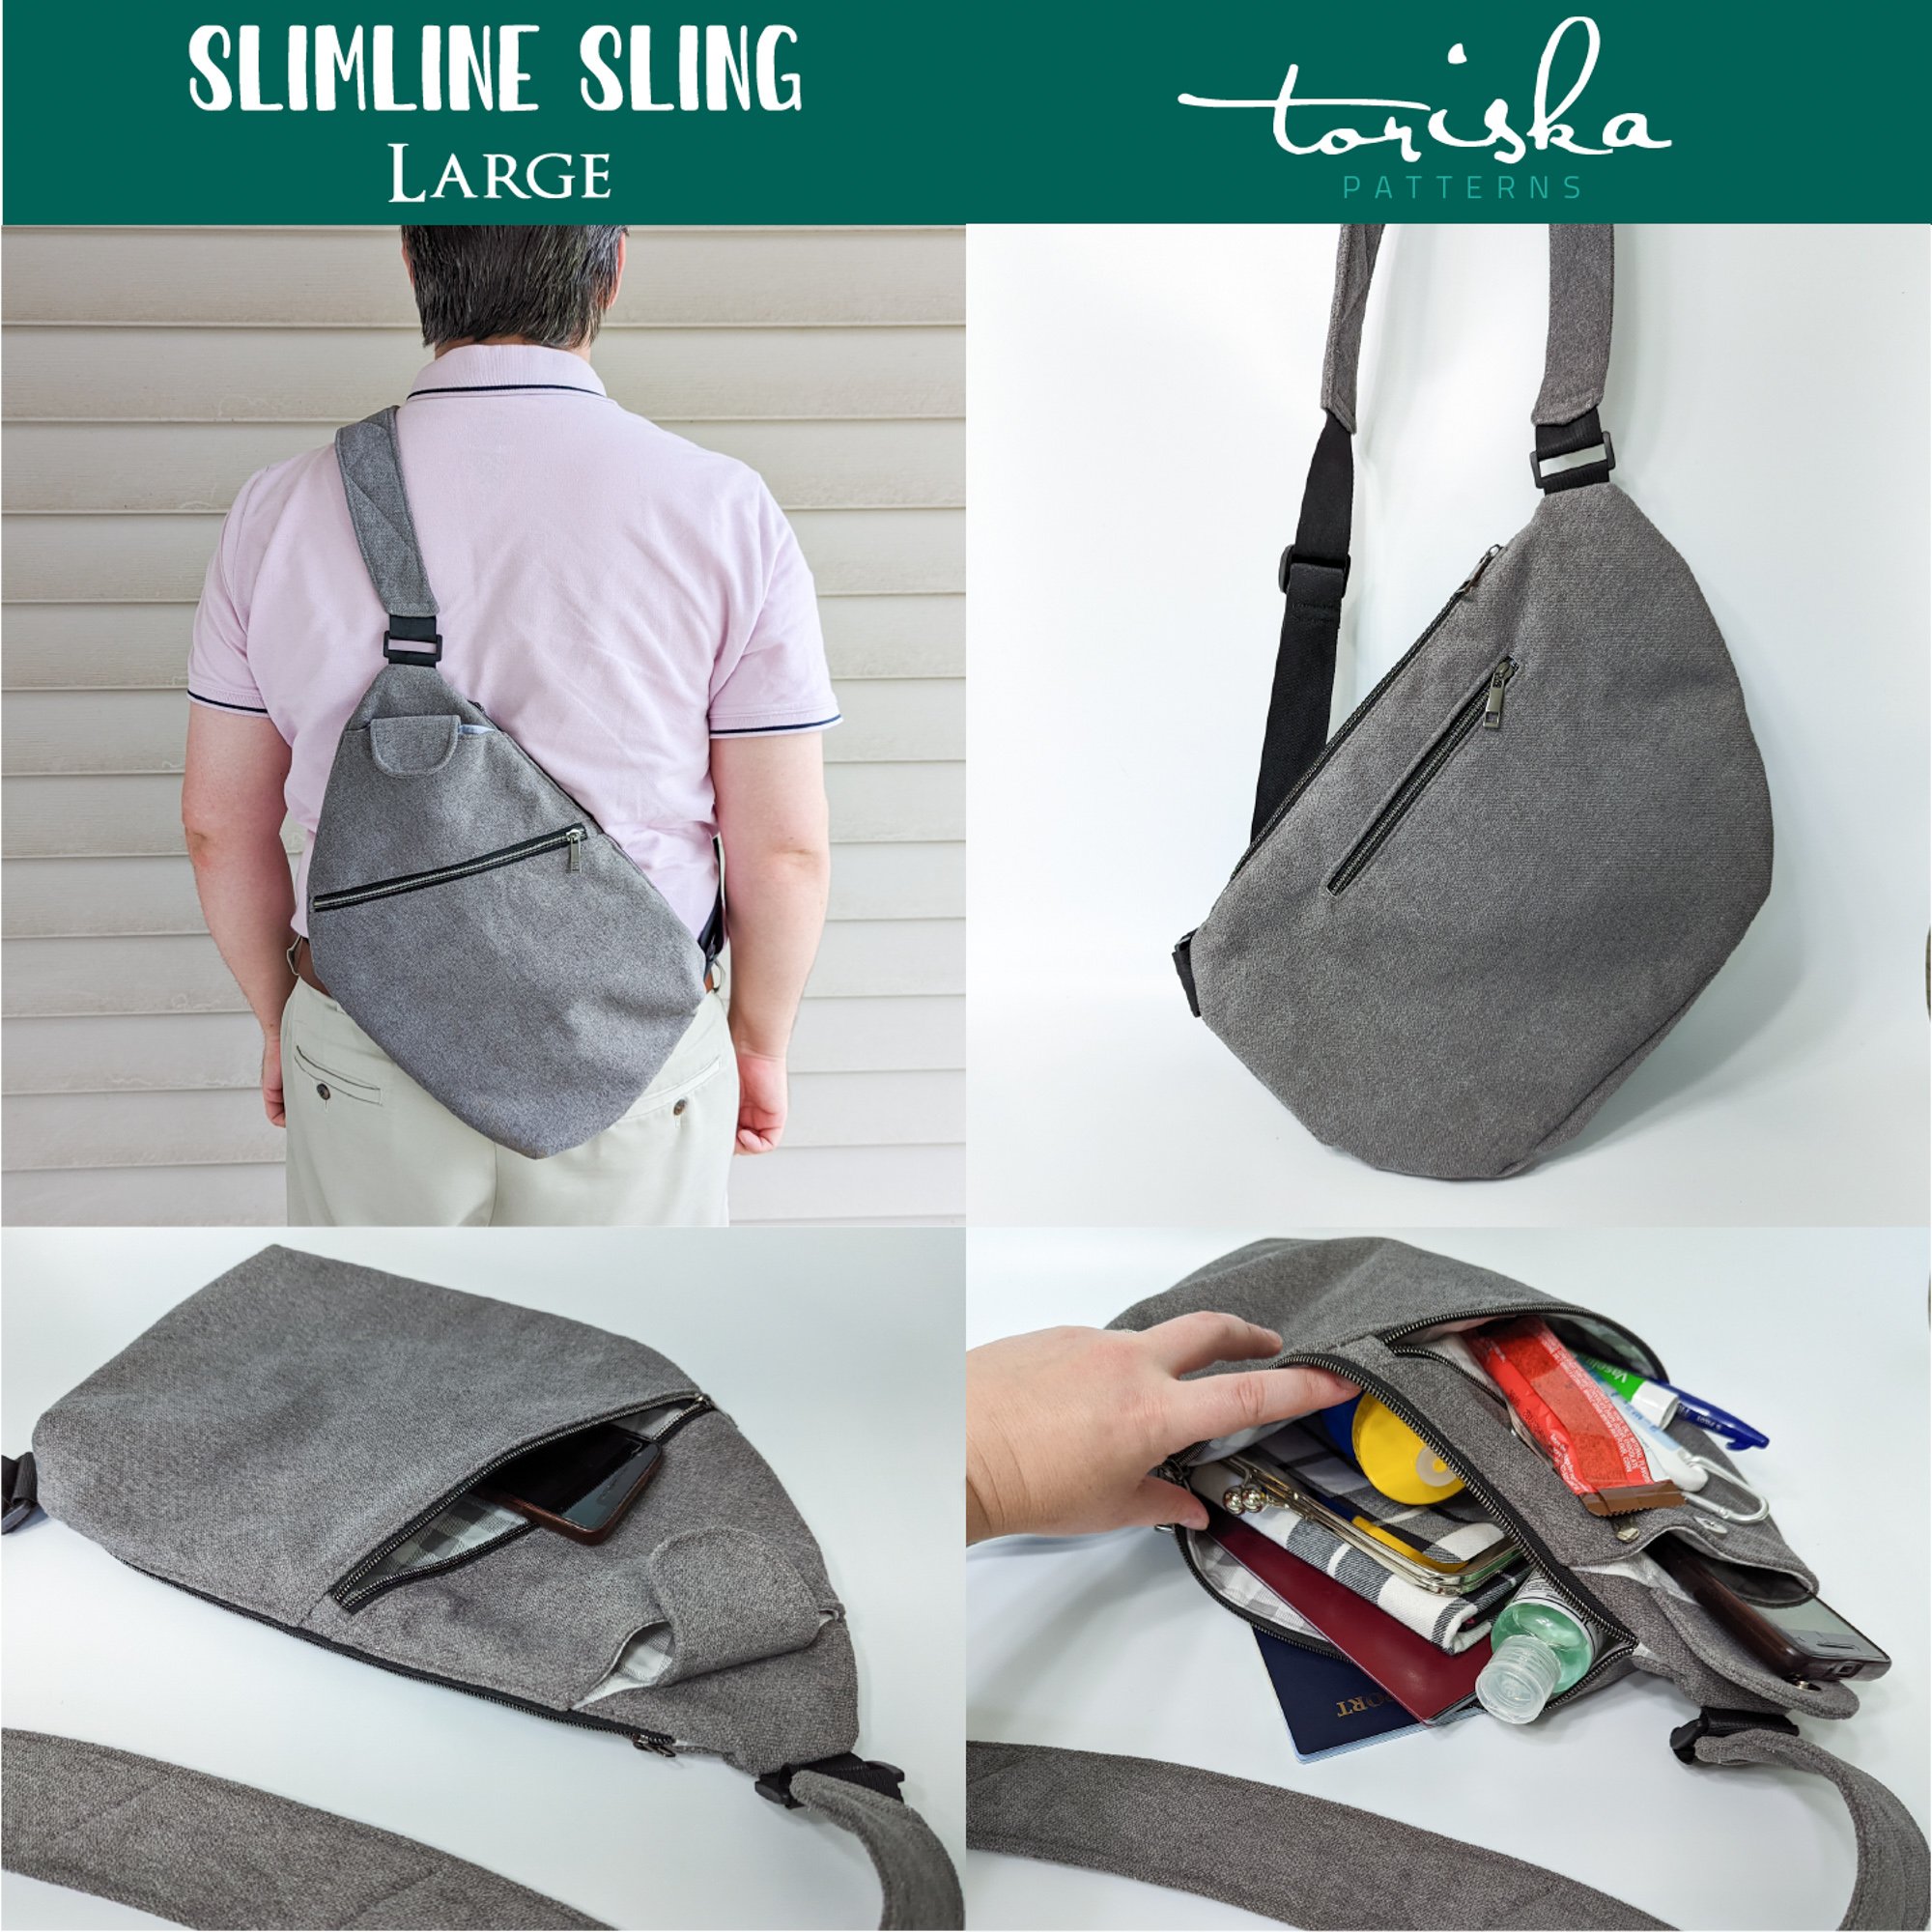 Sling Bag Tutorial